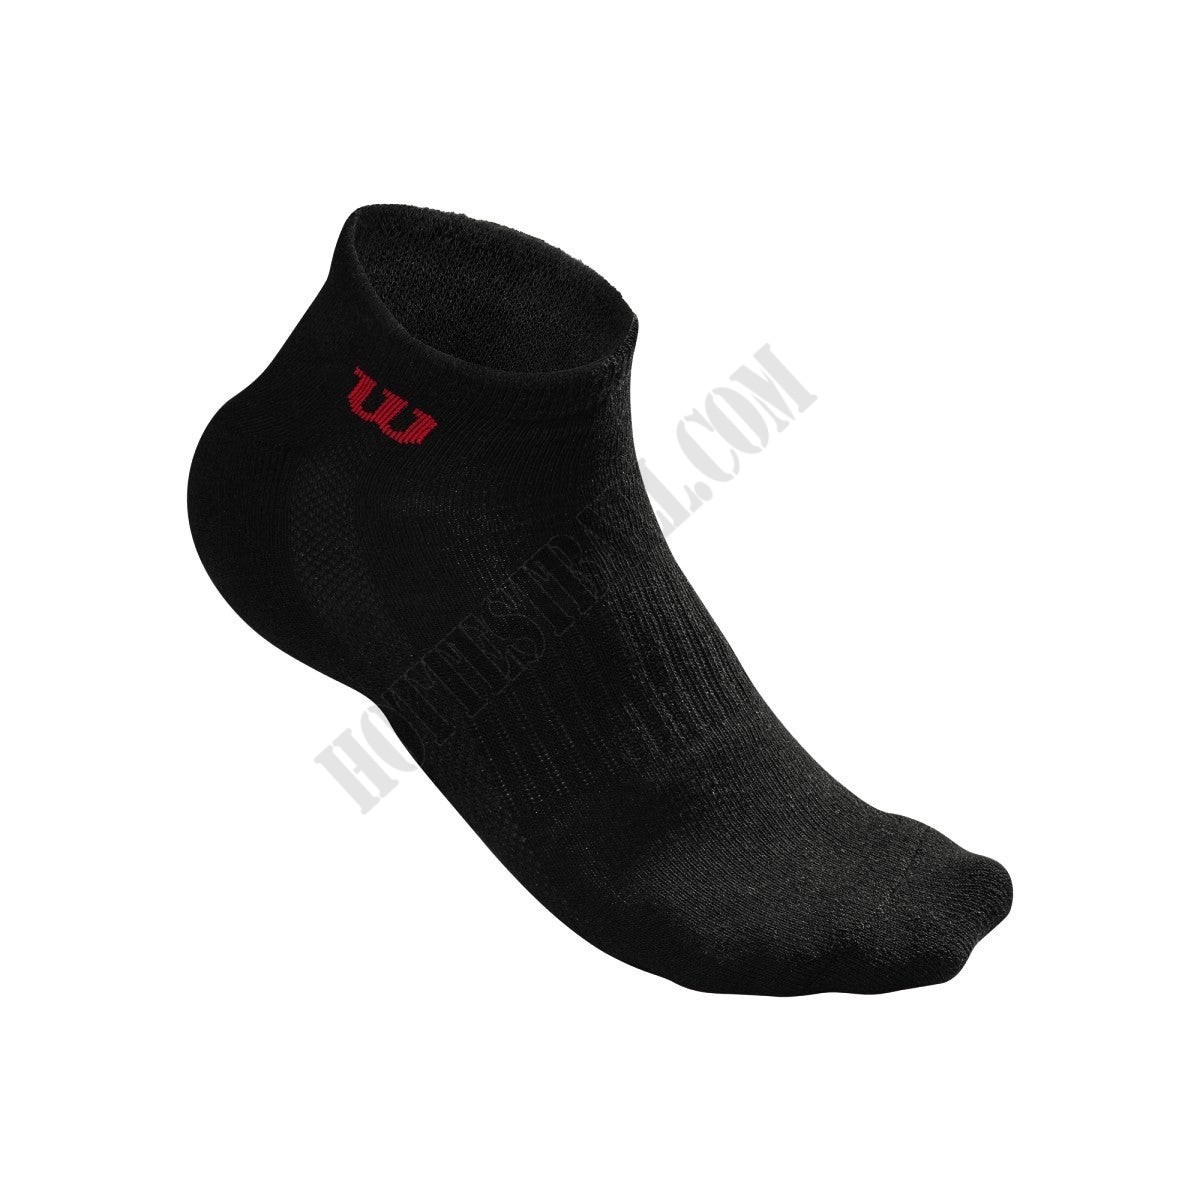 Men's Black Quarter Sock - 3 Pair - Wilson Discount Store - Men's Black Quarter Sock - 3 Pair - Wilson Discount Store